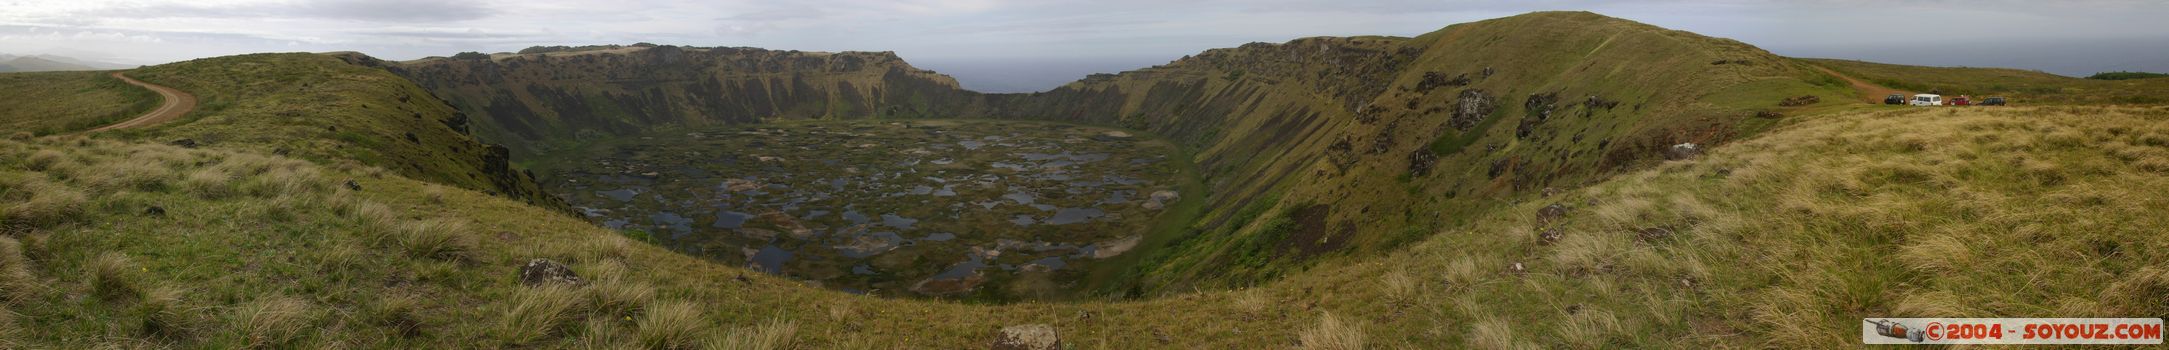 Ile de Paques - Rano Kau - panorama
Mots-clés: chile Ile de Paques Easter Island patrimoine unesco panorama volcan